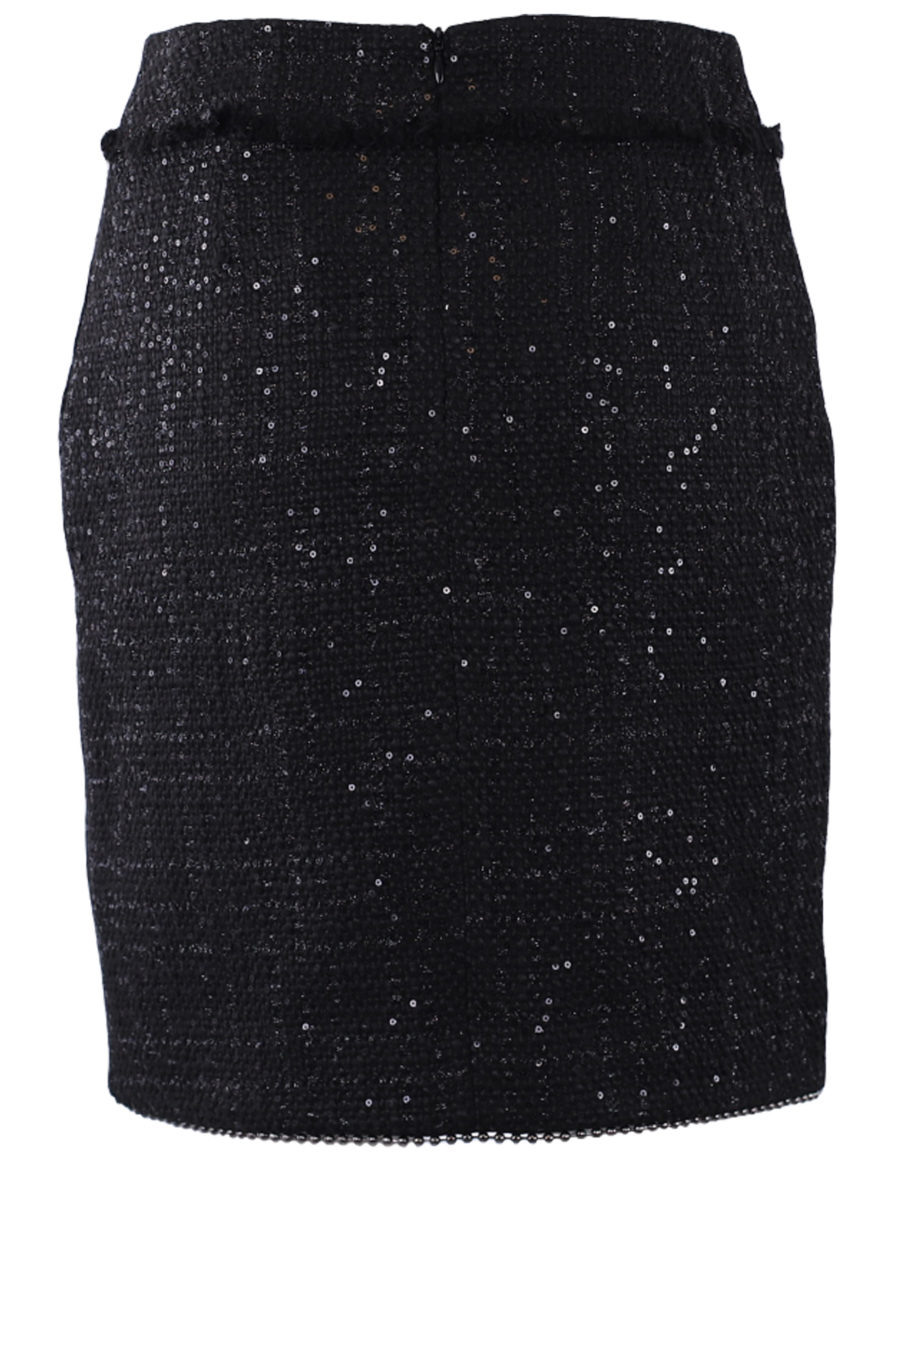 Falda negra con cinta de bouclé - IMG 0353